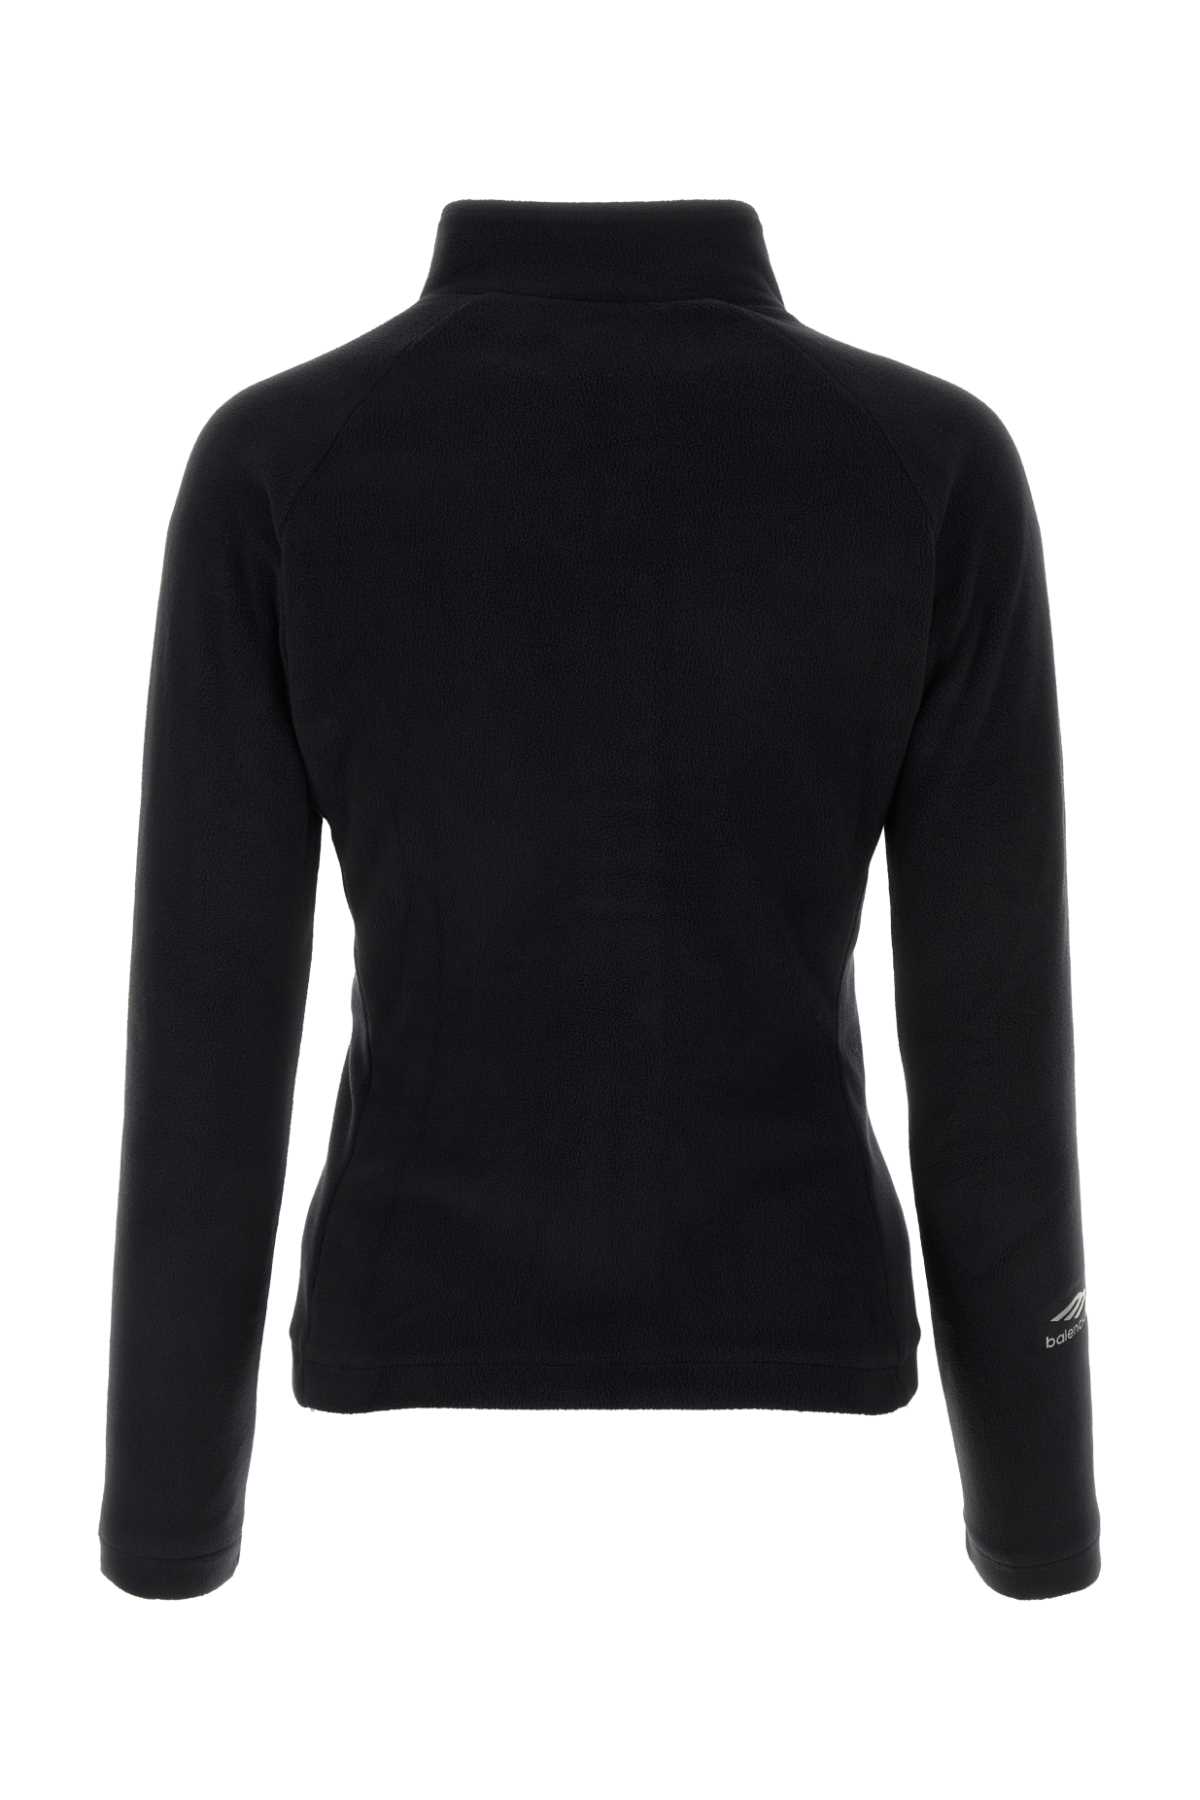 Balenciaga Black Pile Sweatshirt